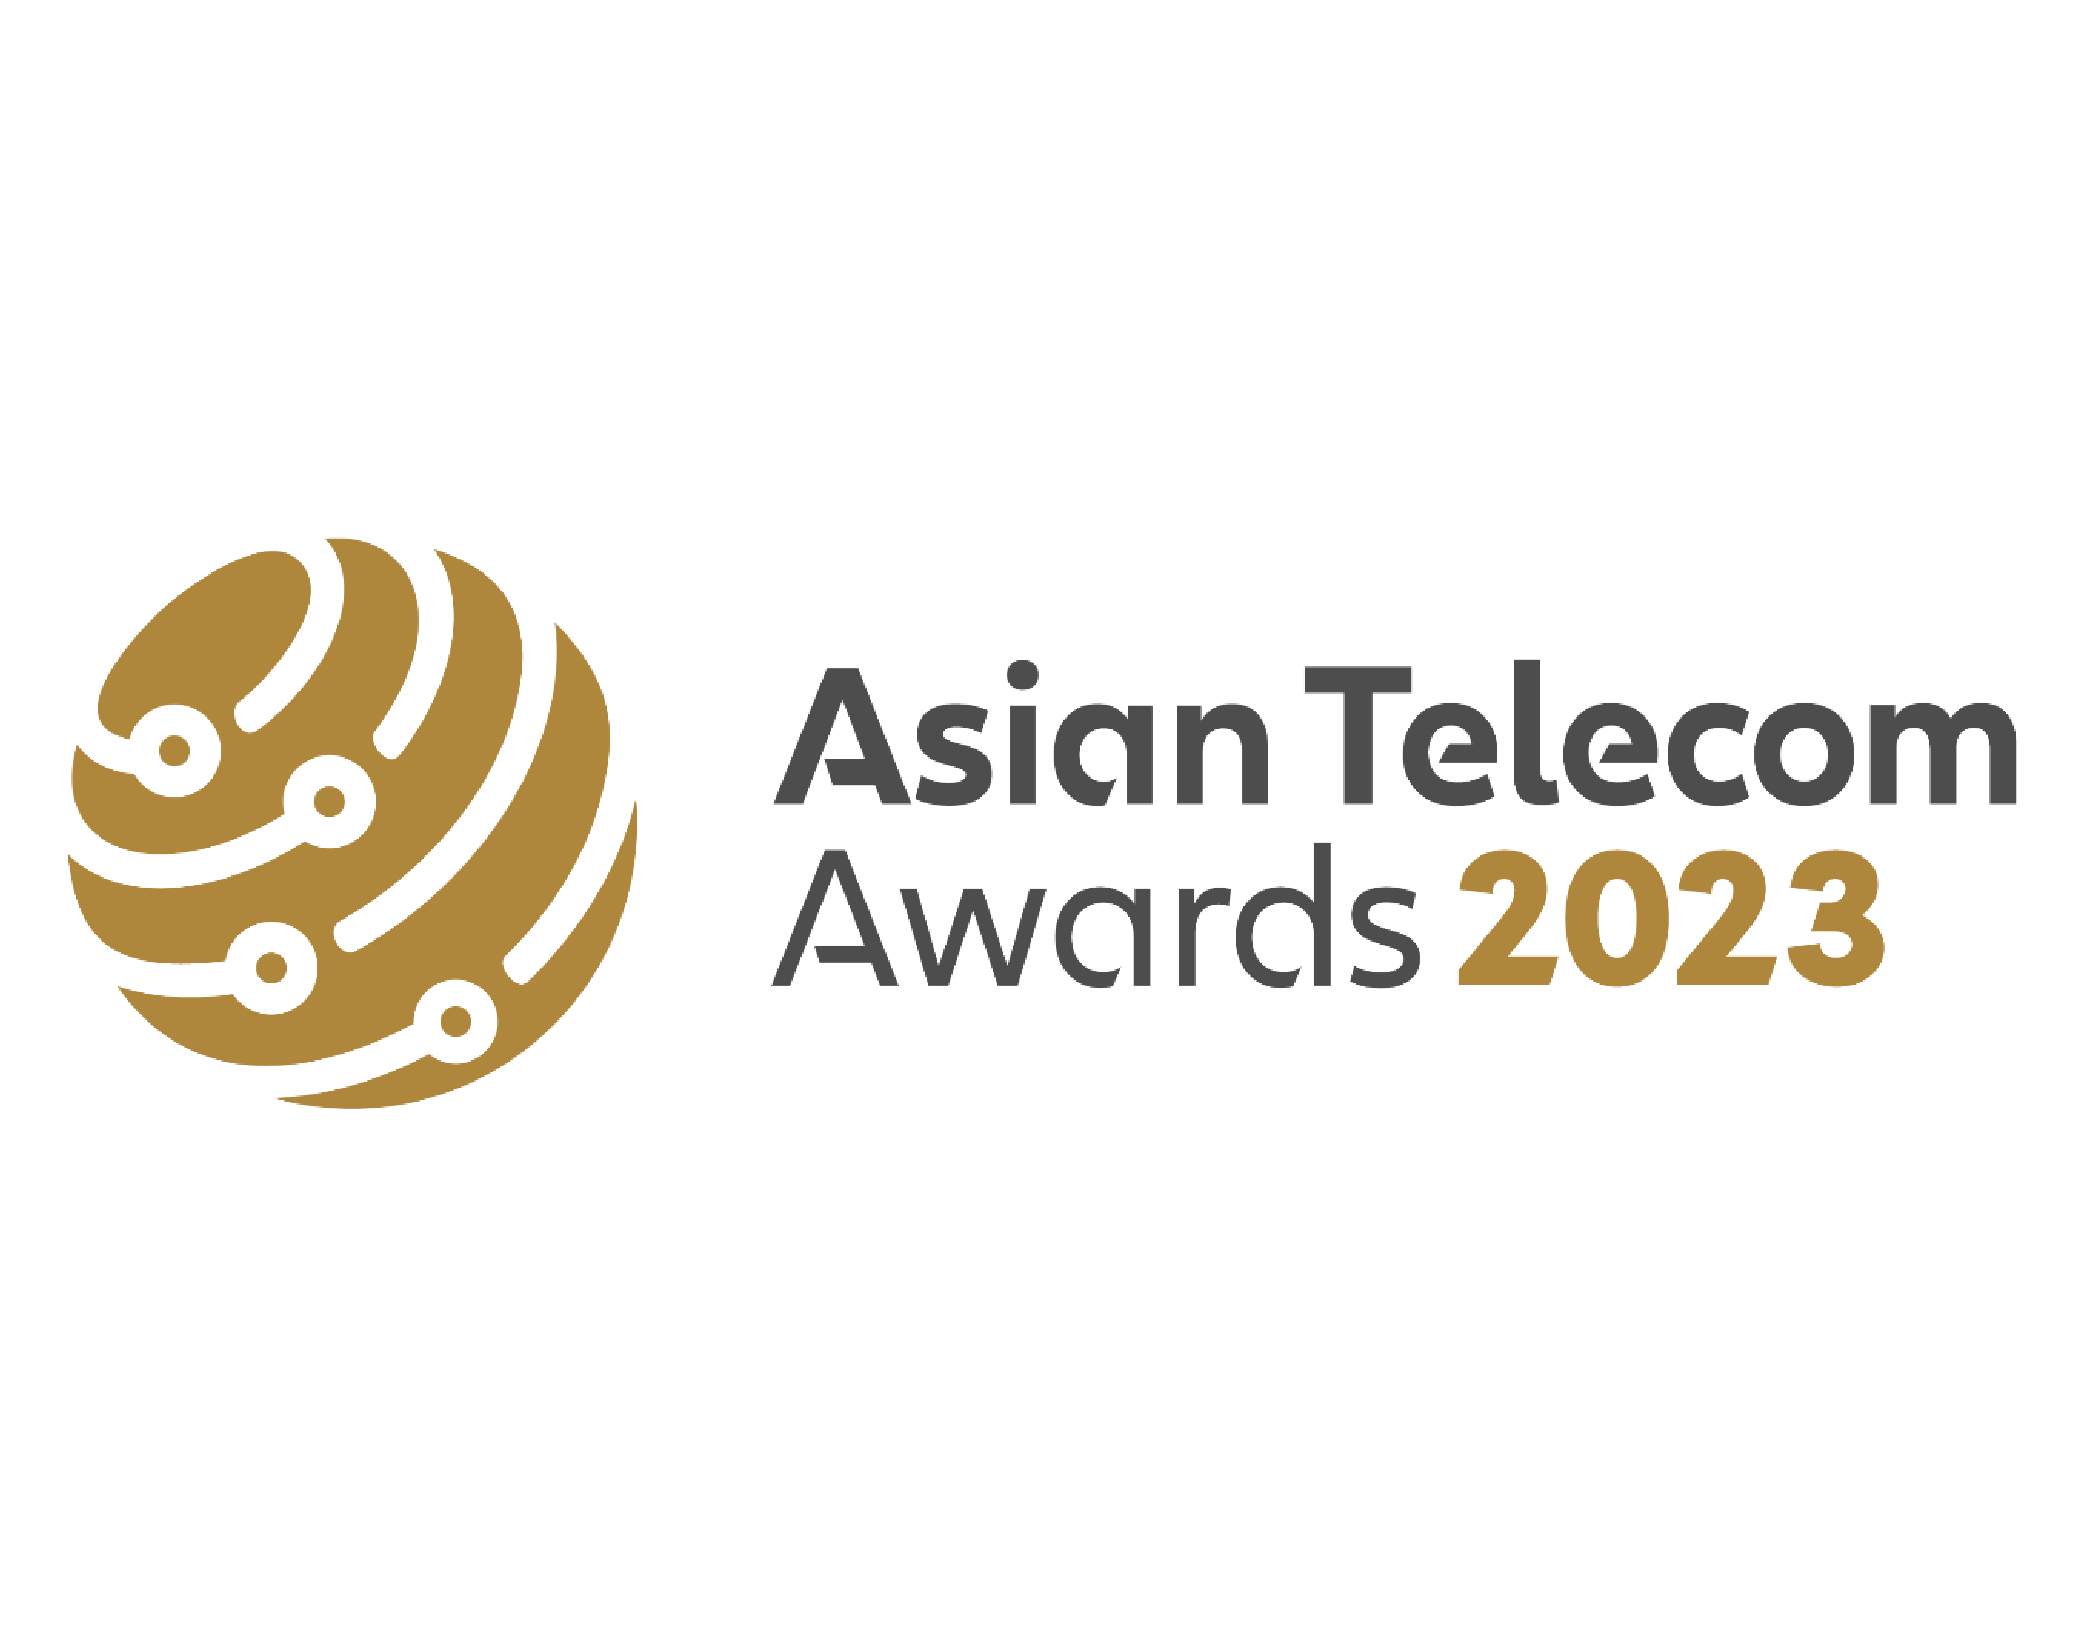 Asian Telecom Awards 2023